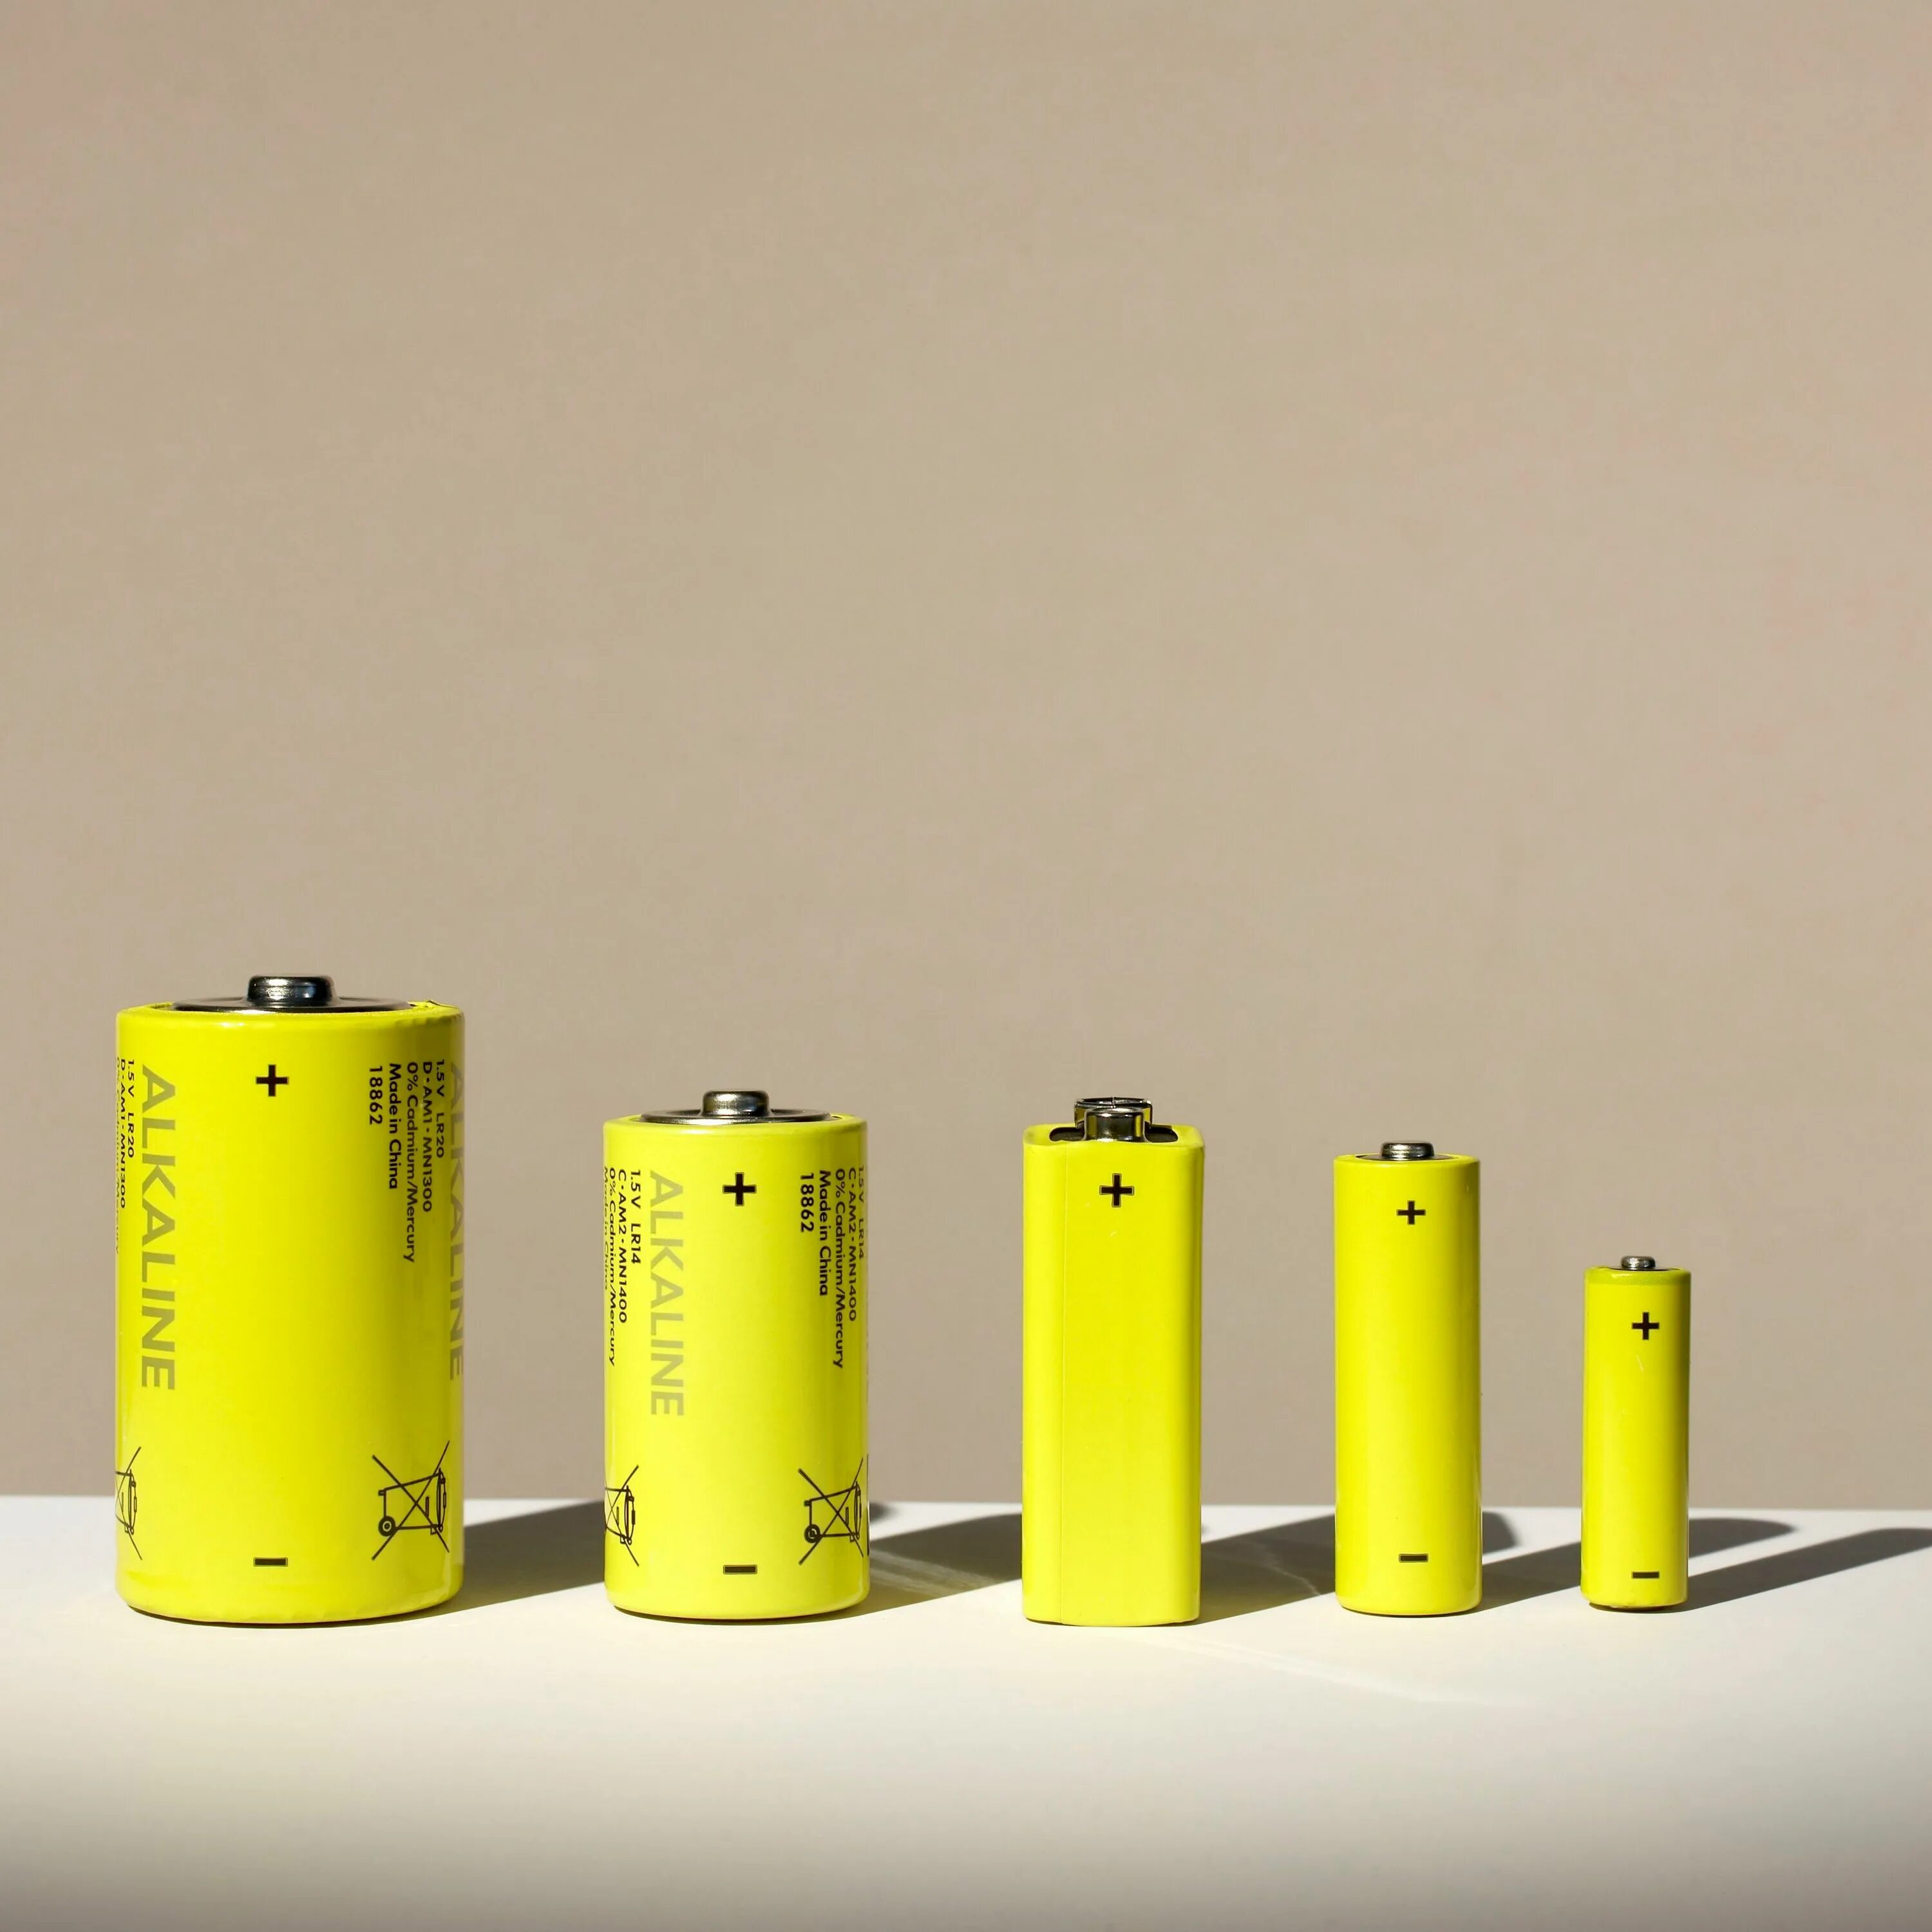 Www batteries com. Желтая батарея. Best Battery аккумулятор. Утилизация литий ионных аккумуляторов. Bbest Battery аккумулятор.